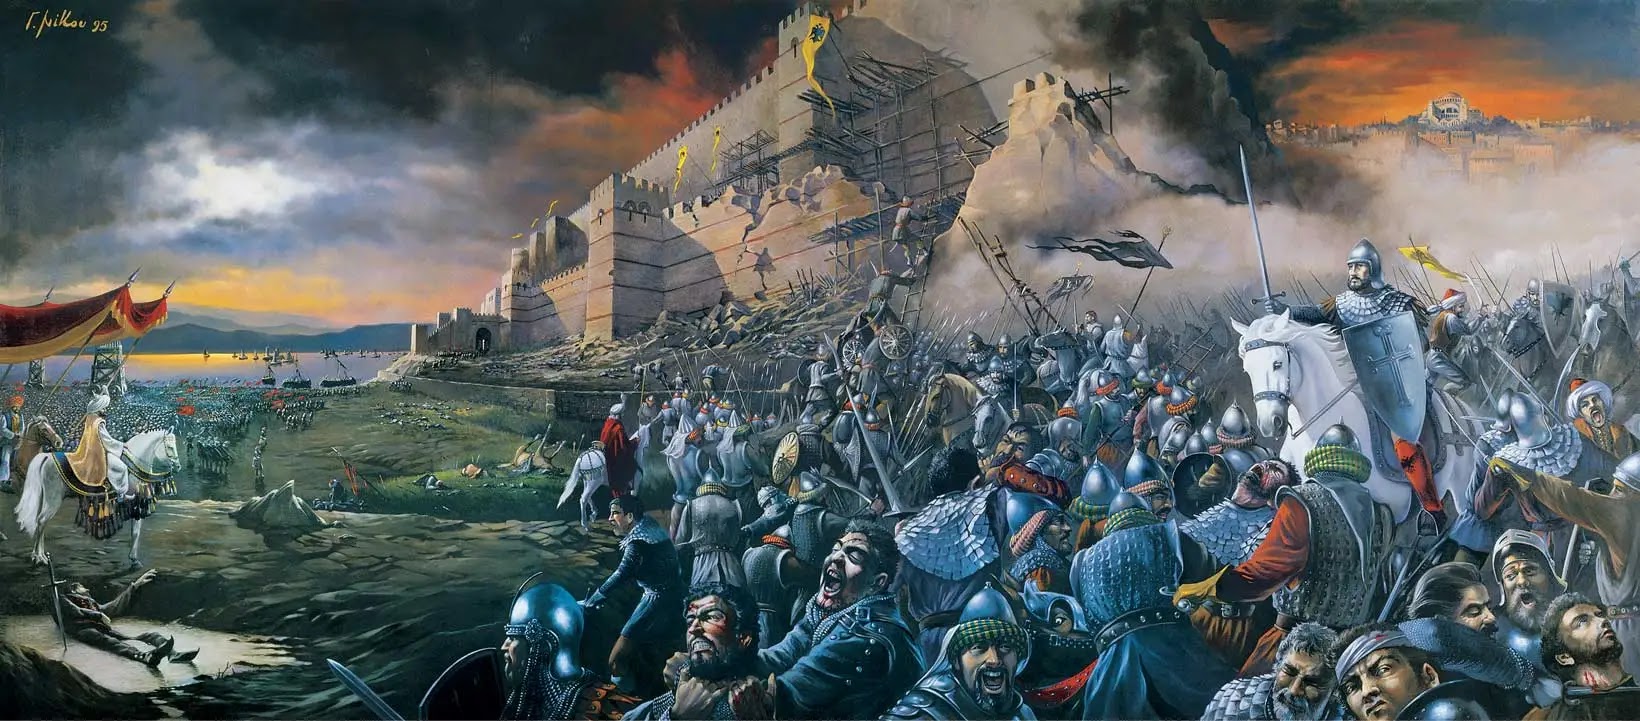 Custodes aput portam Constantinopolis - Οι φύλακες στην πύλη της Κωνσταντινούπολης